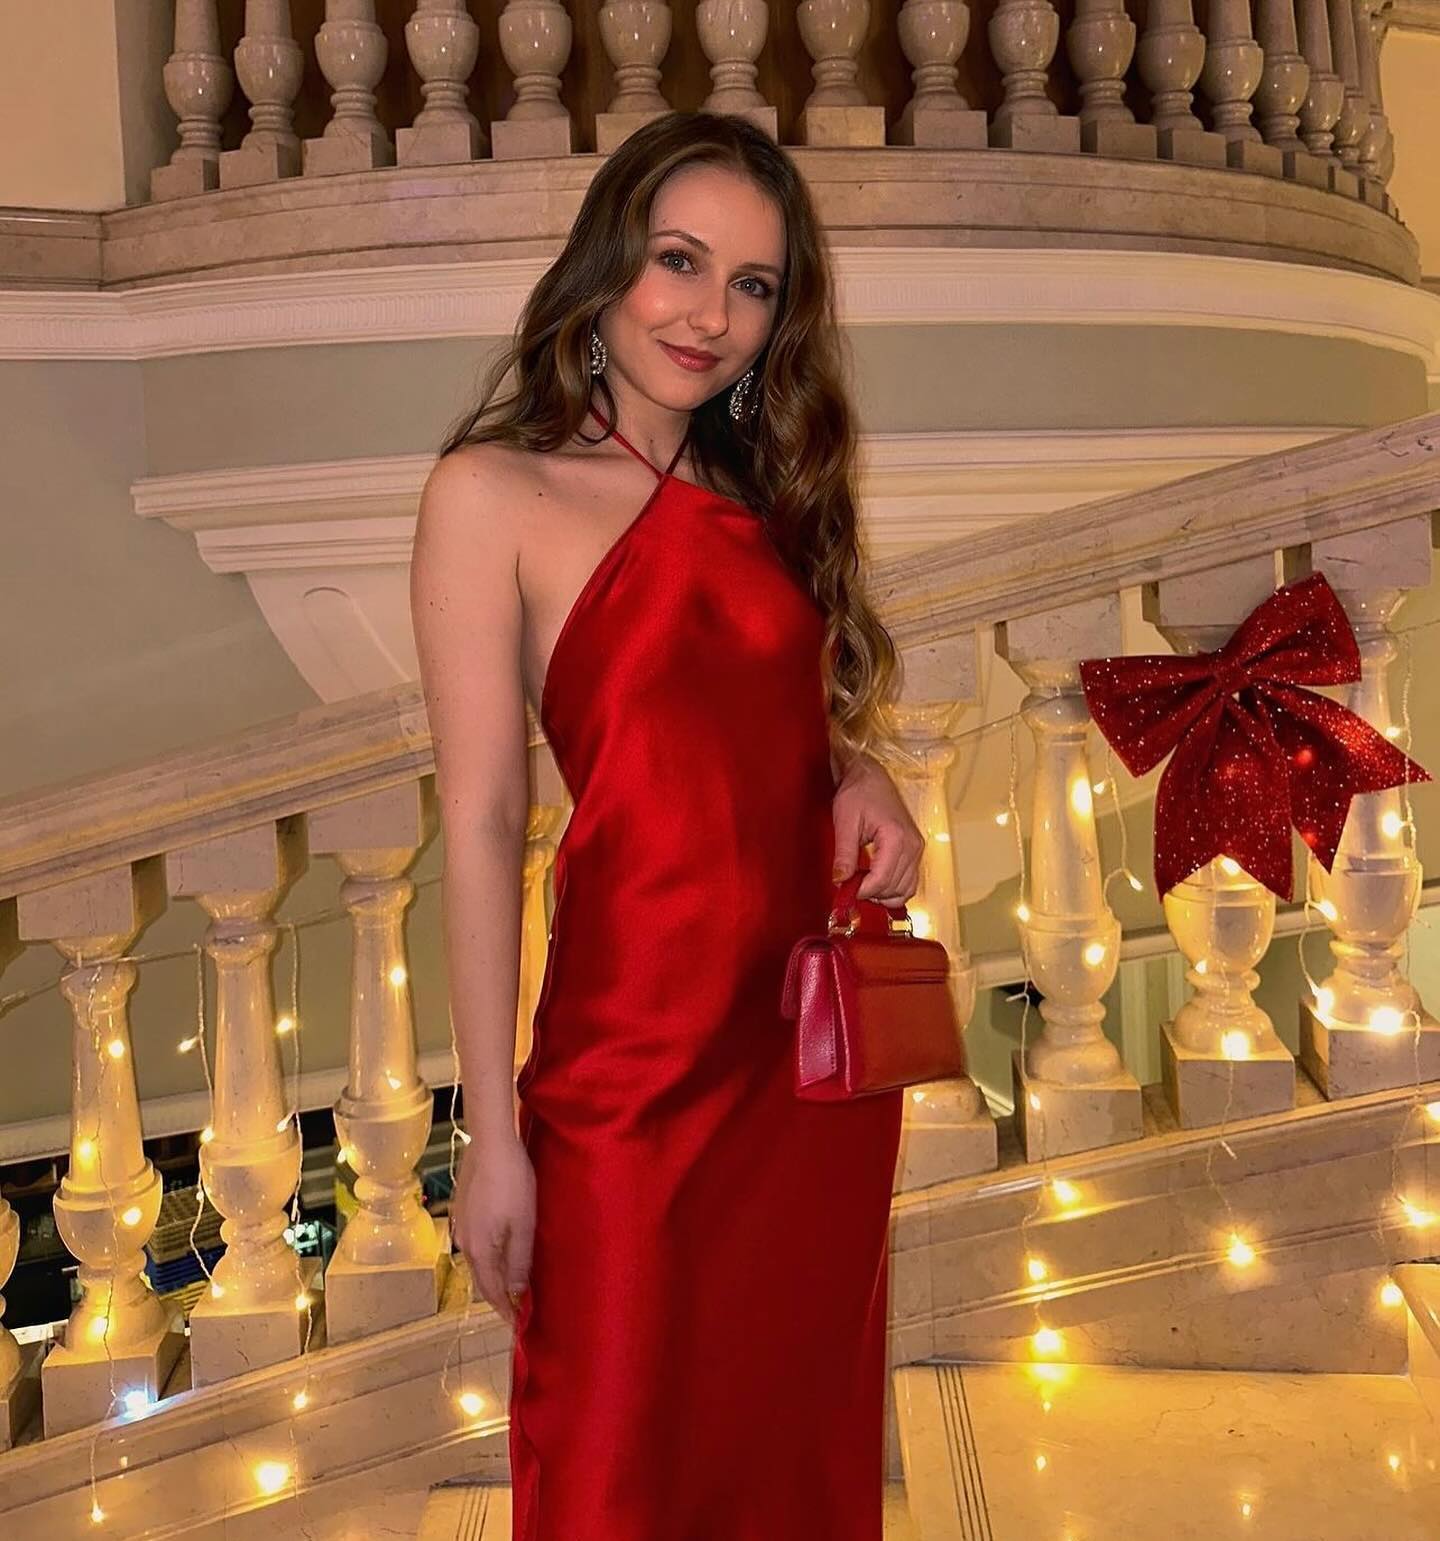 Red Halter Dress For Valentine Date Night